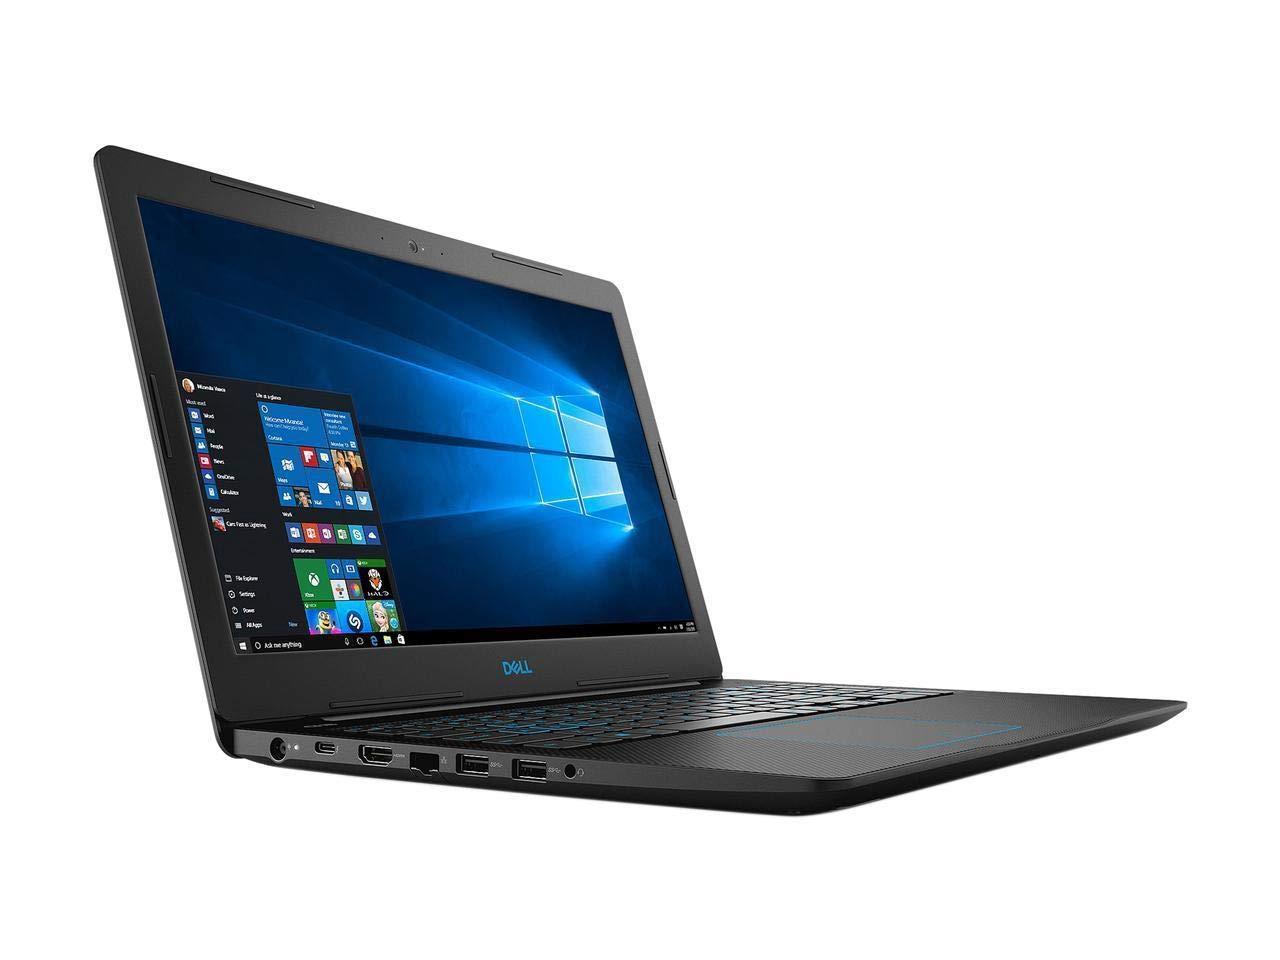 Newest Dell 15.6" FHD IPS High-Performance Gaming Laptop | Intel Core i5-8300H Quad-Core| 12GB DDR4 RAM |1TB +8GB Hybrid |NVIDIA GeForce GTX 1050Ti 4GB | Backlit Keyboard | MaxxAudio|Windows 10